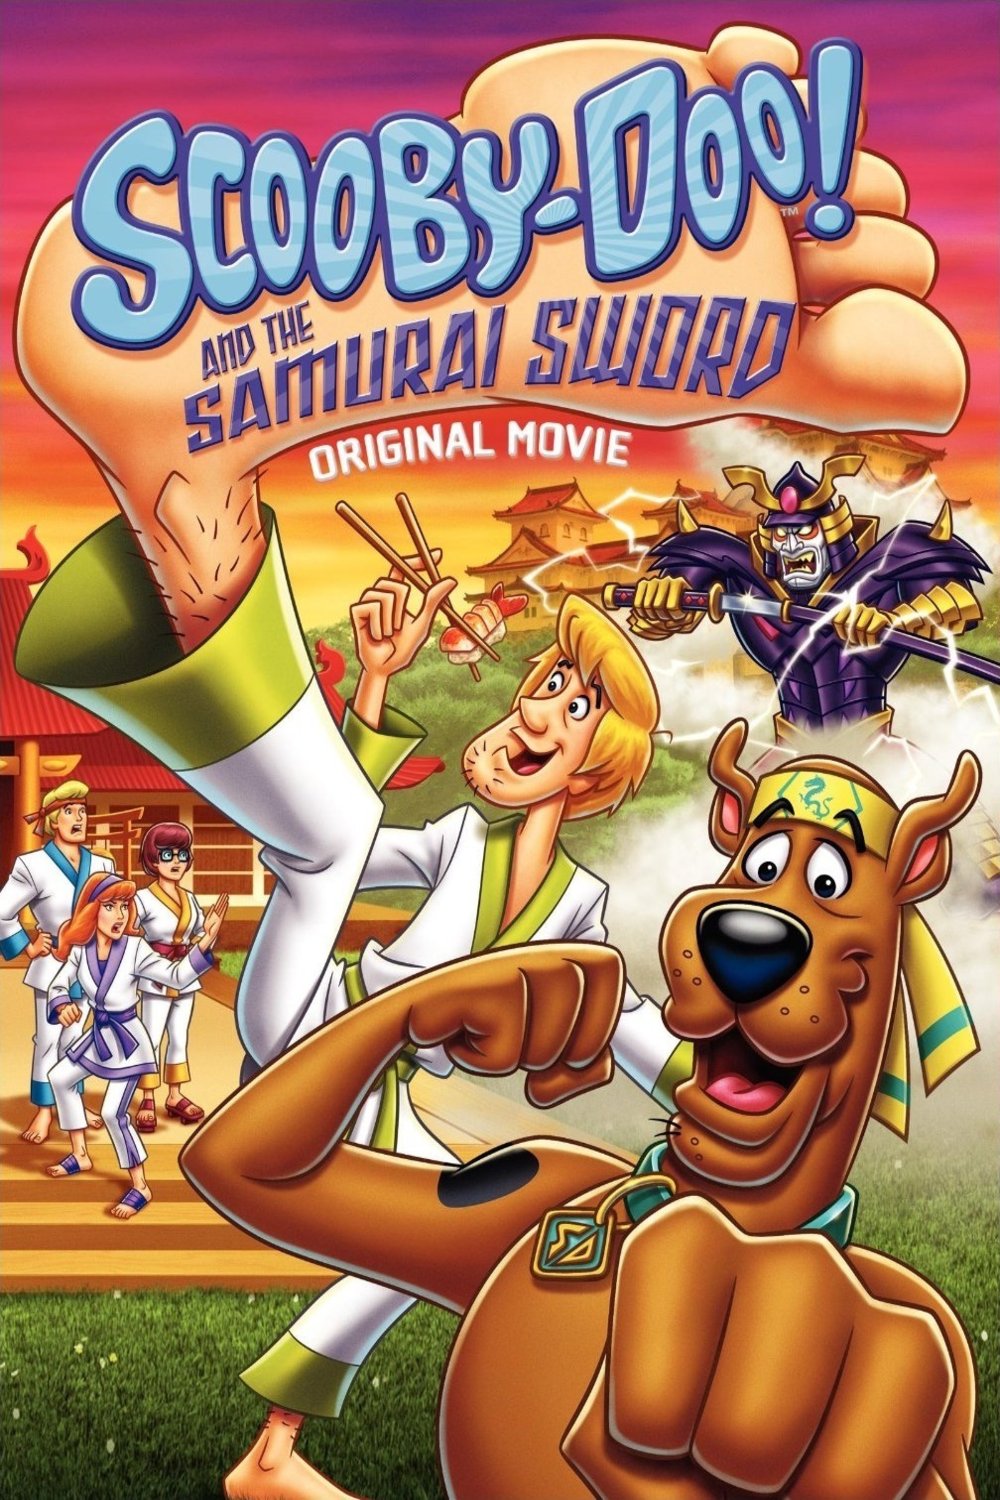 L'affiche du film Scooby-Doo and the Samurai Sword